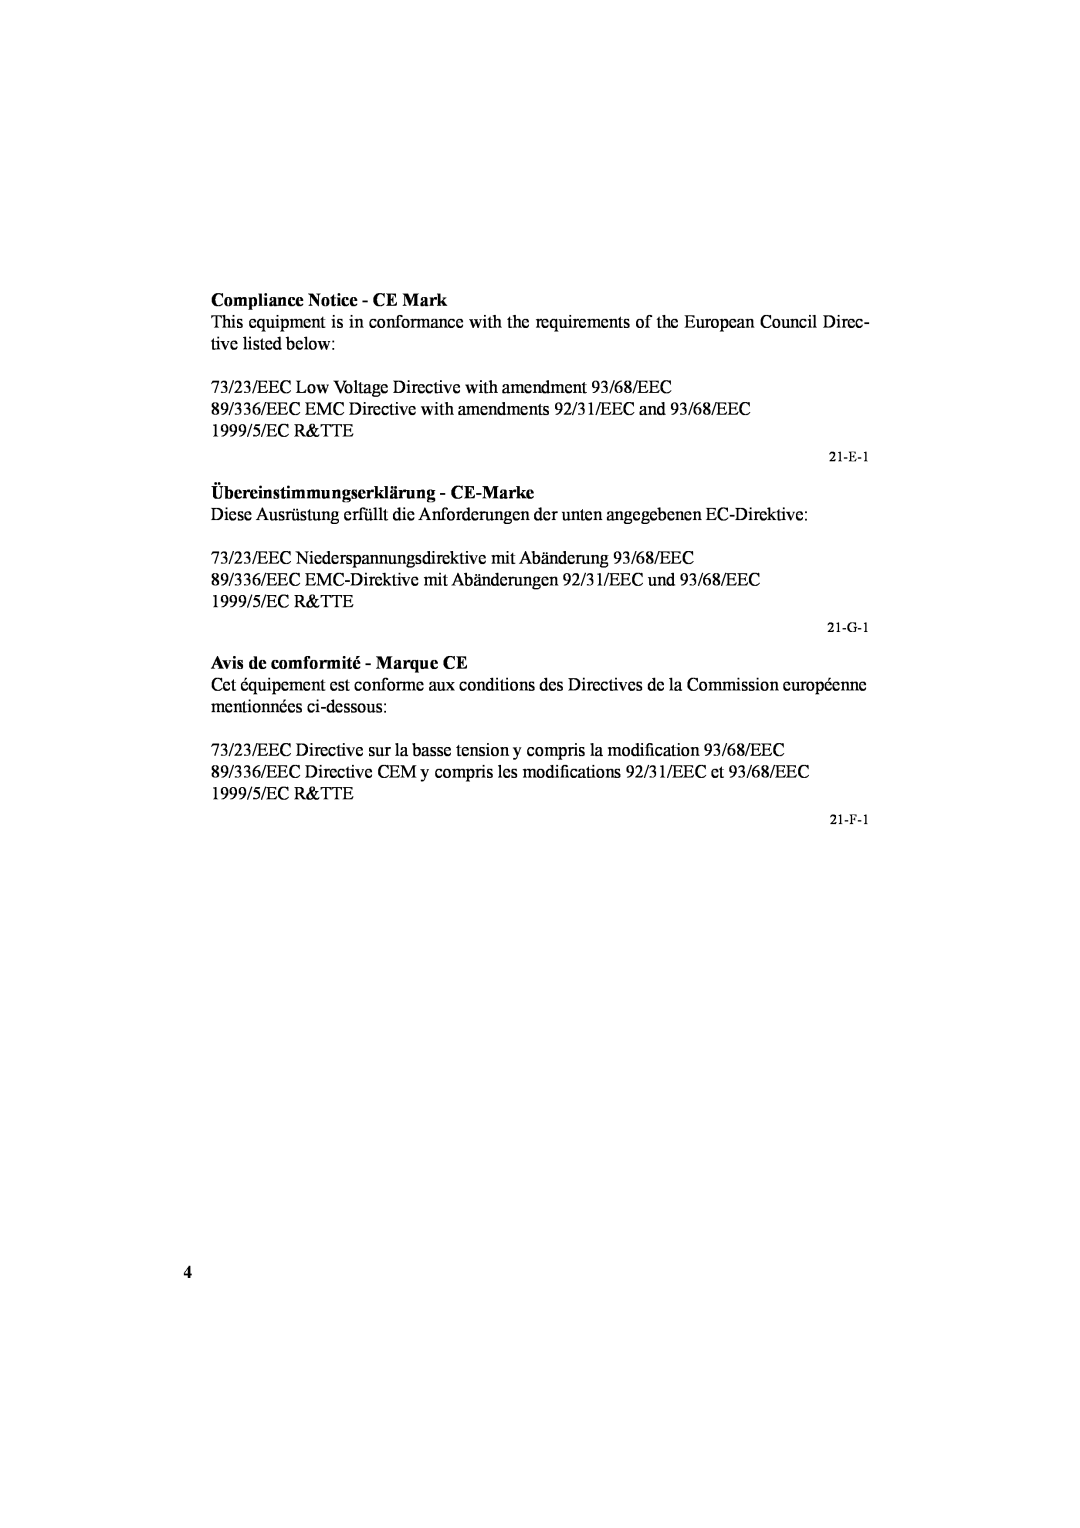 Panasonic CF-VDR301U Compliance Notice - CE Mark, Übereinstimmungserklärung - CE-Marke, Avis de comformité - Marque CE 